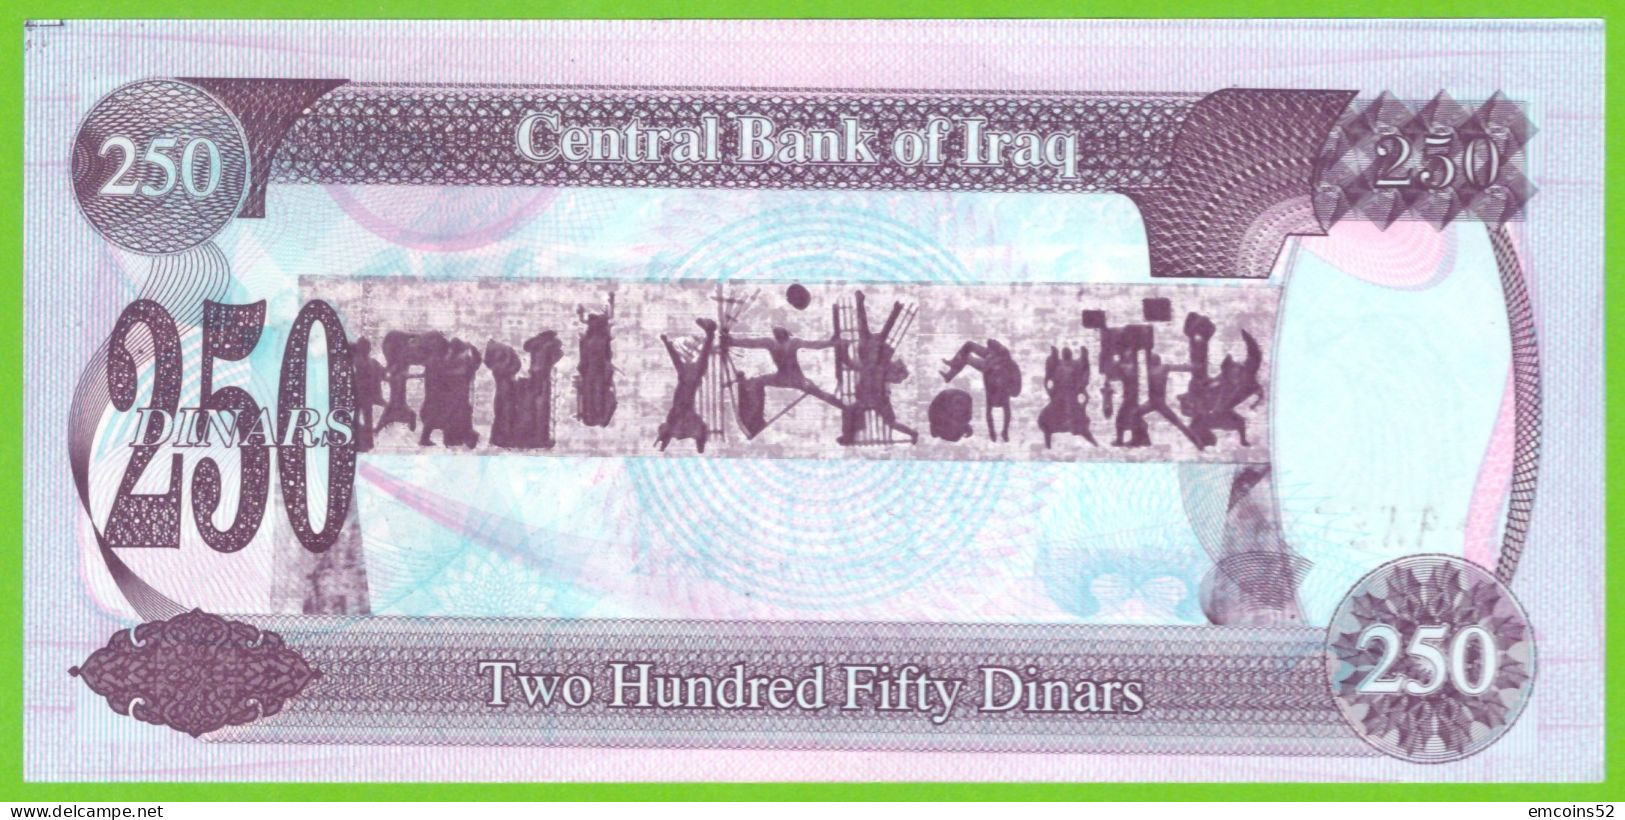 IRAQ 250 DINARS 1995 P-85  UNC DIFFERENT COLOUR - Iraq